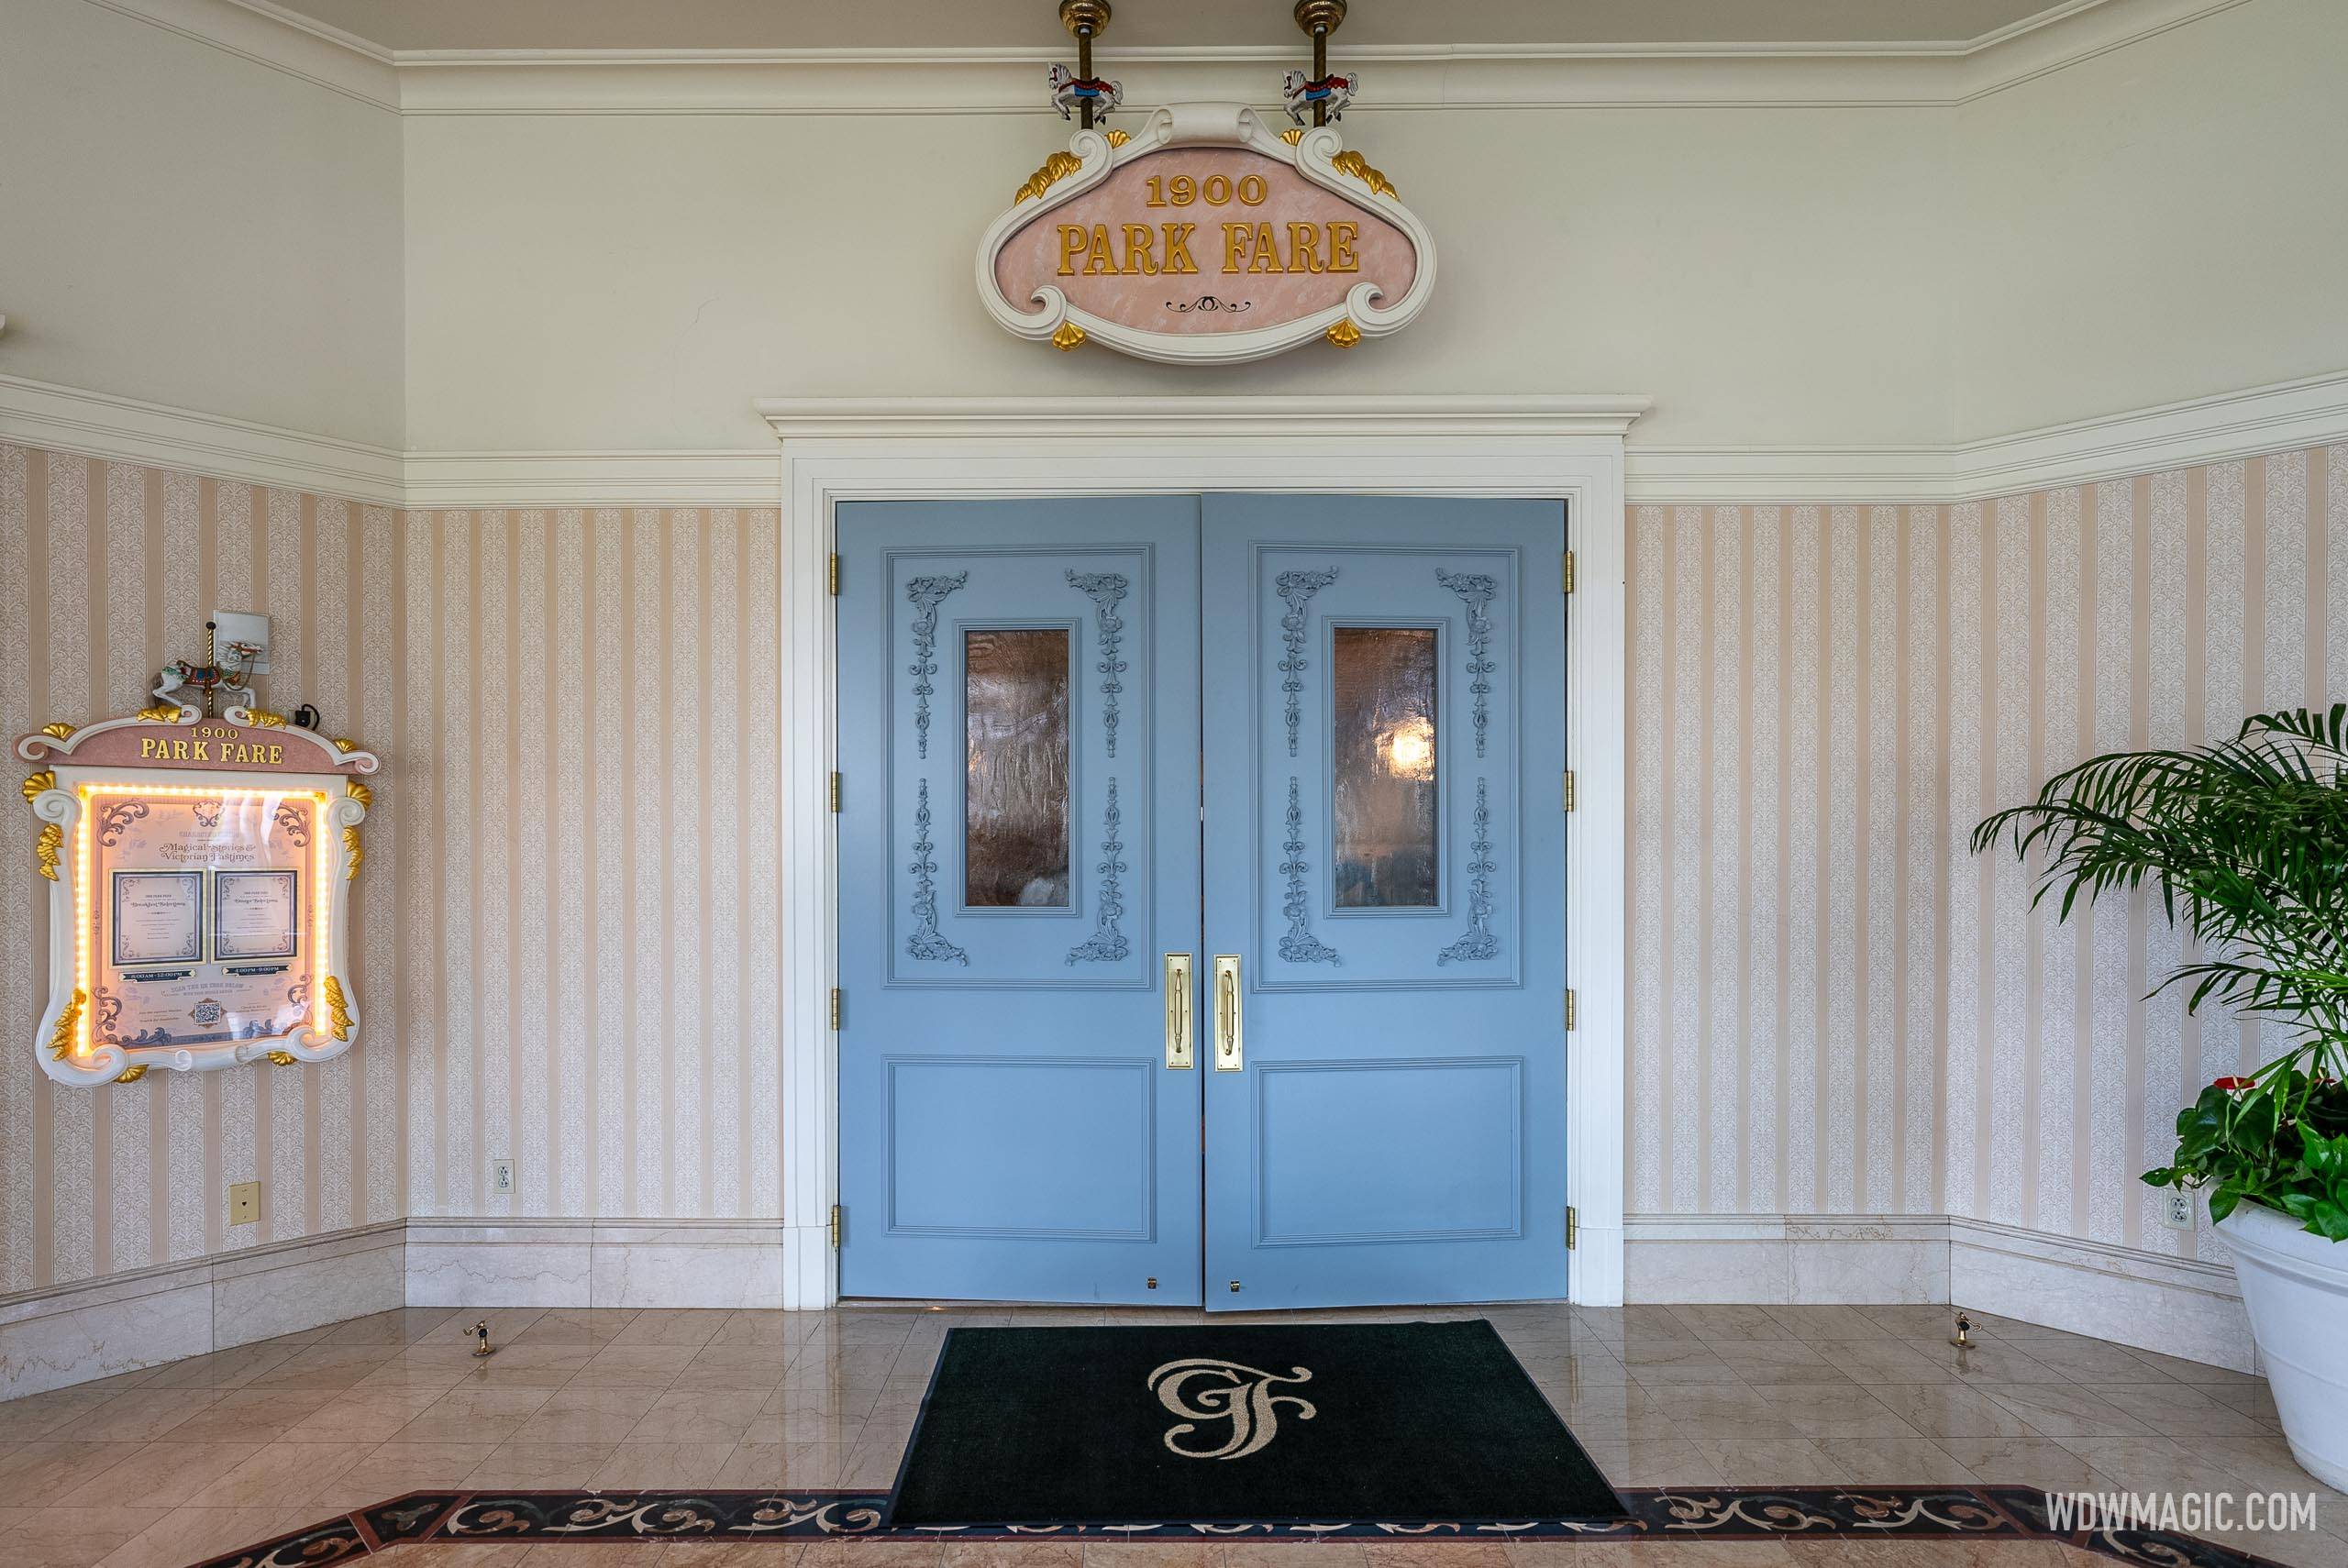 1900 Park Fare at Disney's Grand Floridian Resort